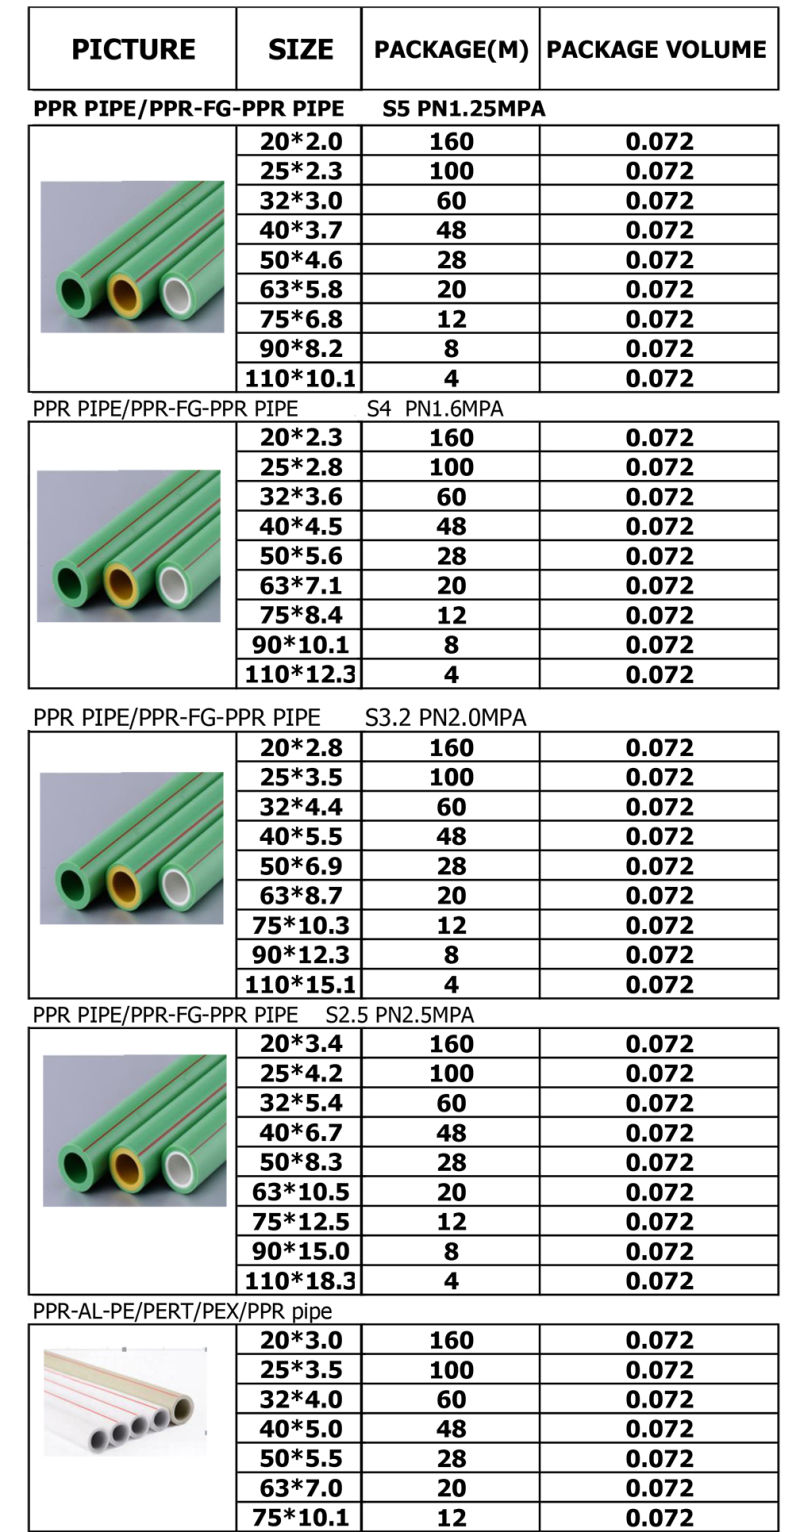 Hb-2165 PPR Clip PPR Pipe Clip PPR Clamp Price List PPR Fittings